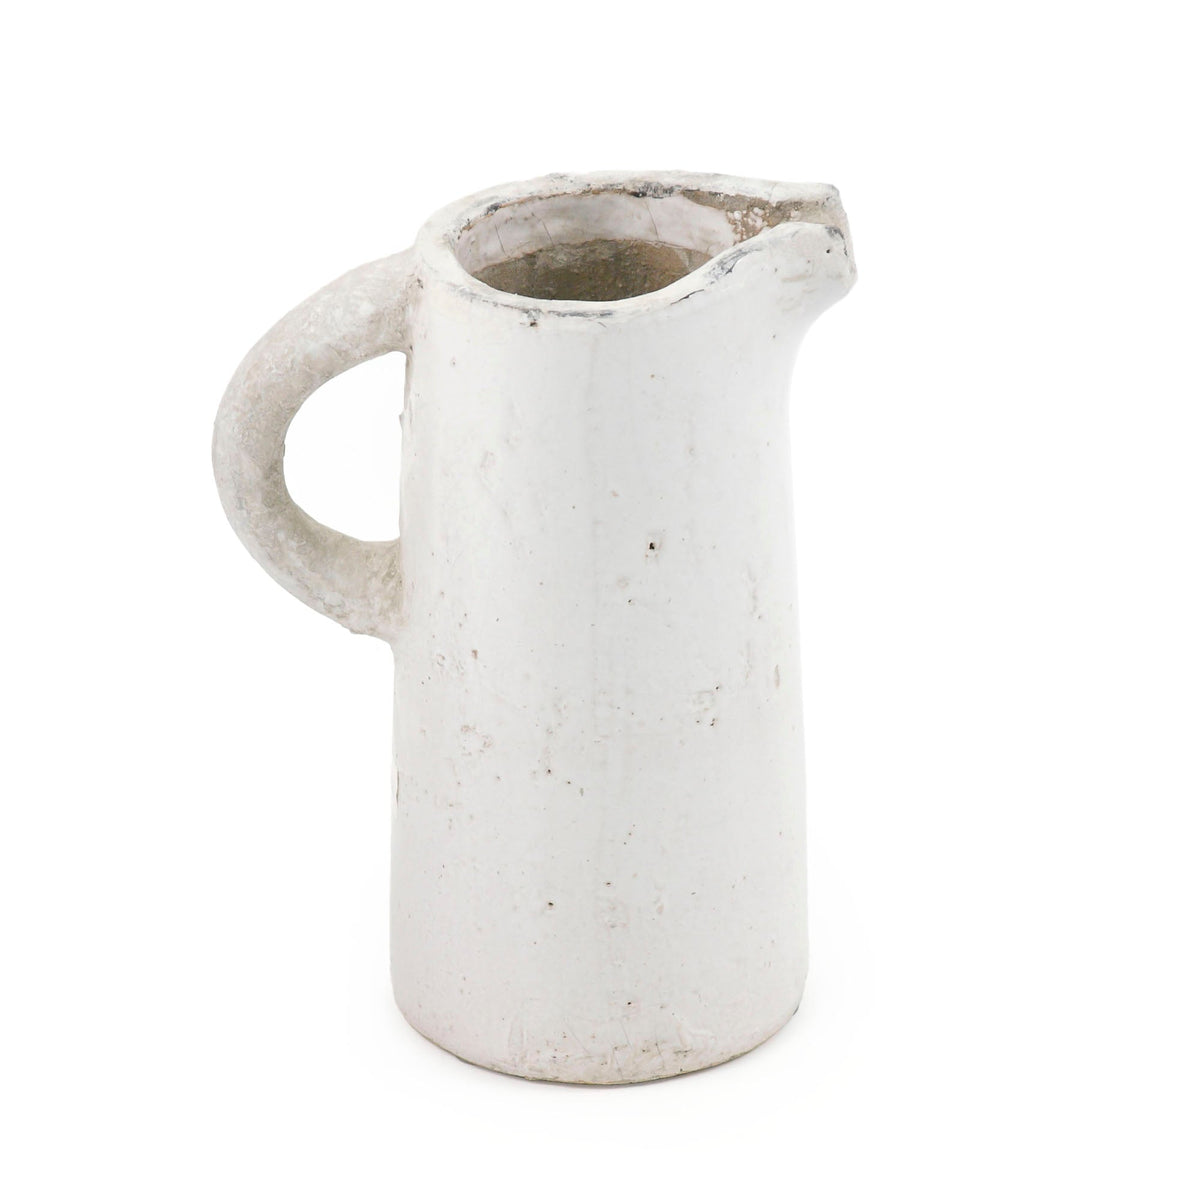 Distressed White Ceramic Pitcher (5311S) by Zentique